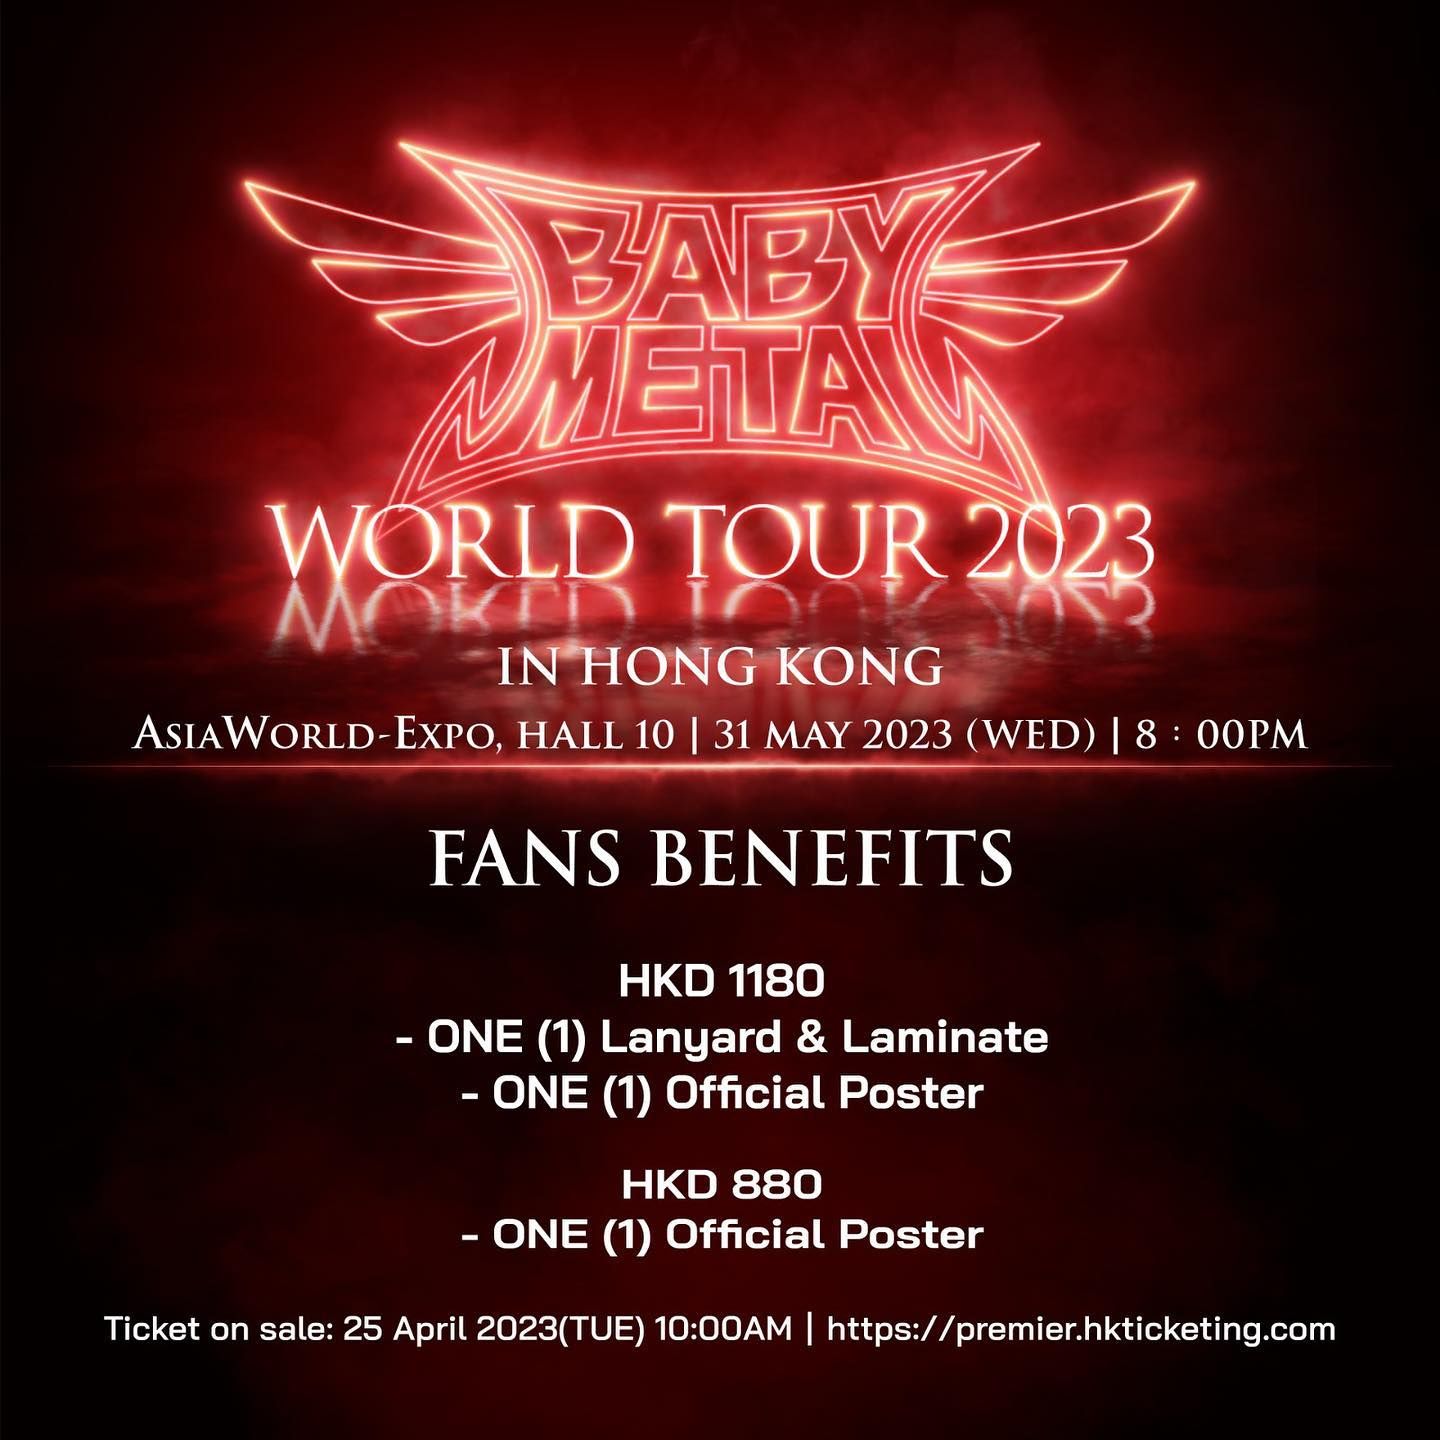 BABYMETAL 世界巡迴演唱會香港站2023 - Timable Hong Kong Event